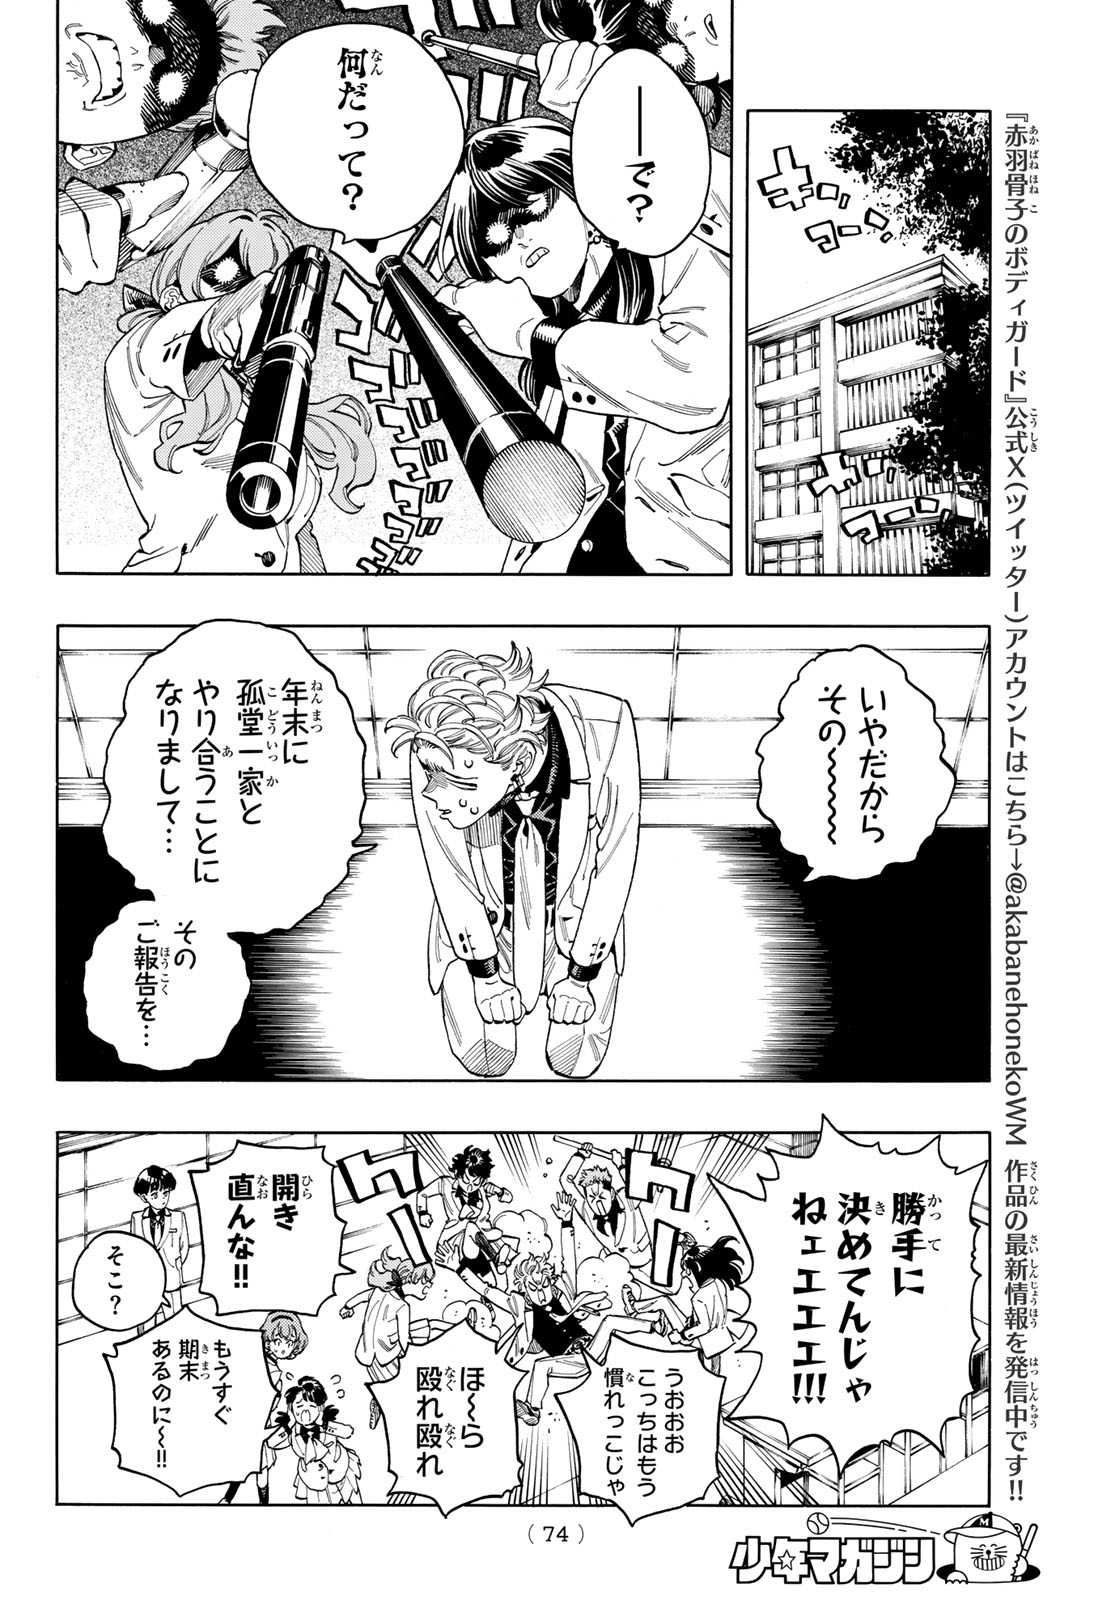 Akabane Honeko no Bodyguard - Chapter 85 - Page 16